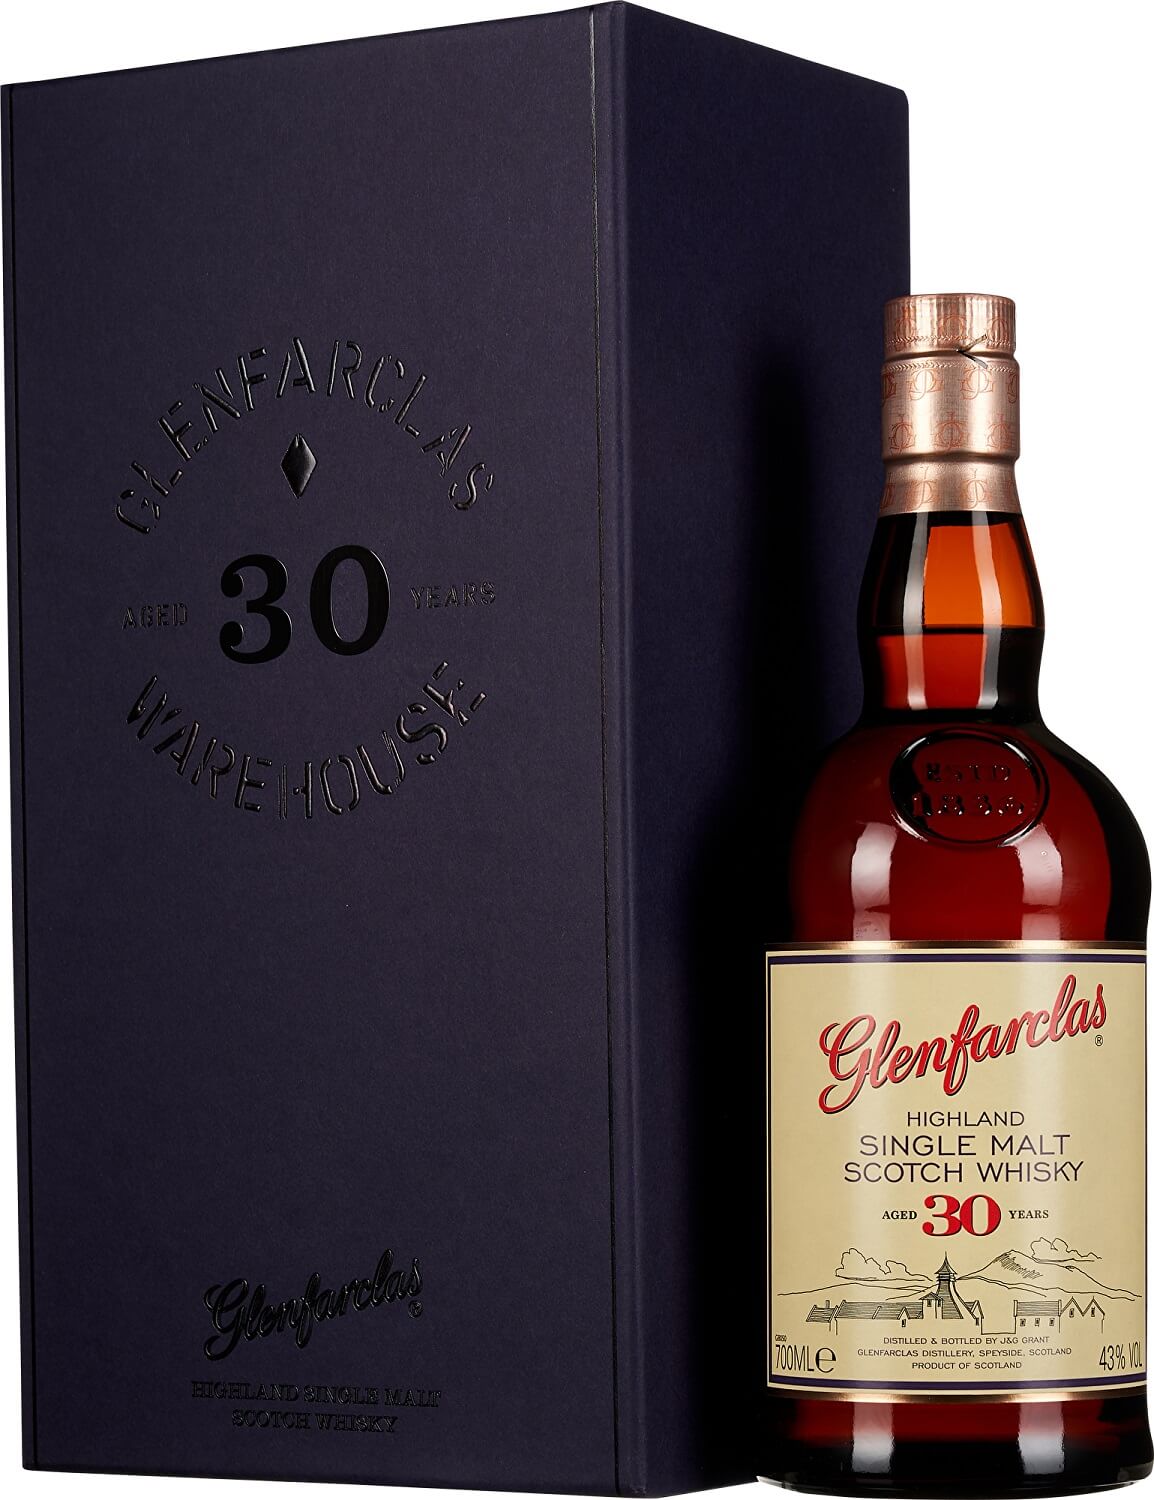 Warehouse Jahre Single Scotch Malt Highland Edition Glenfarclas 30 43% Whisky Vol.